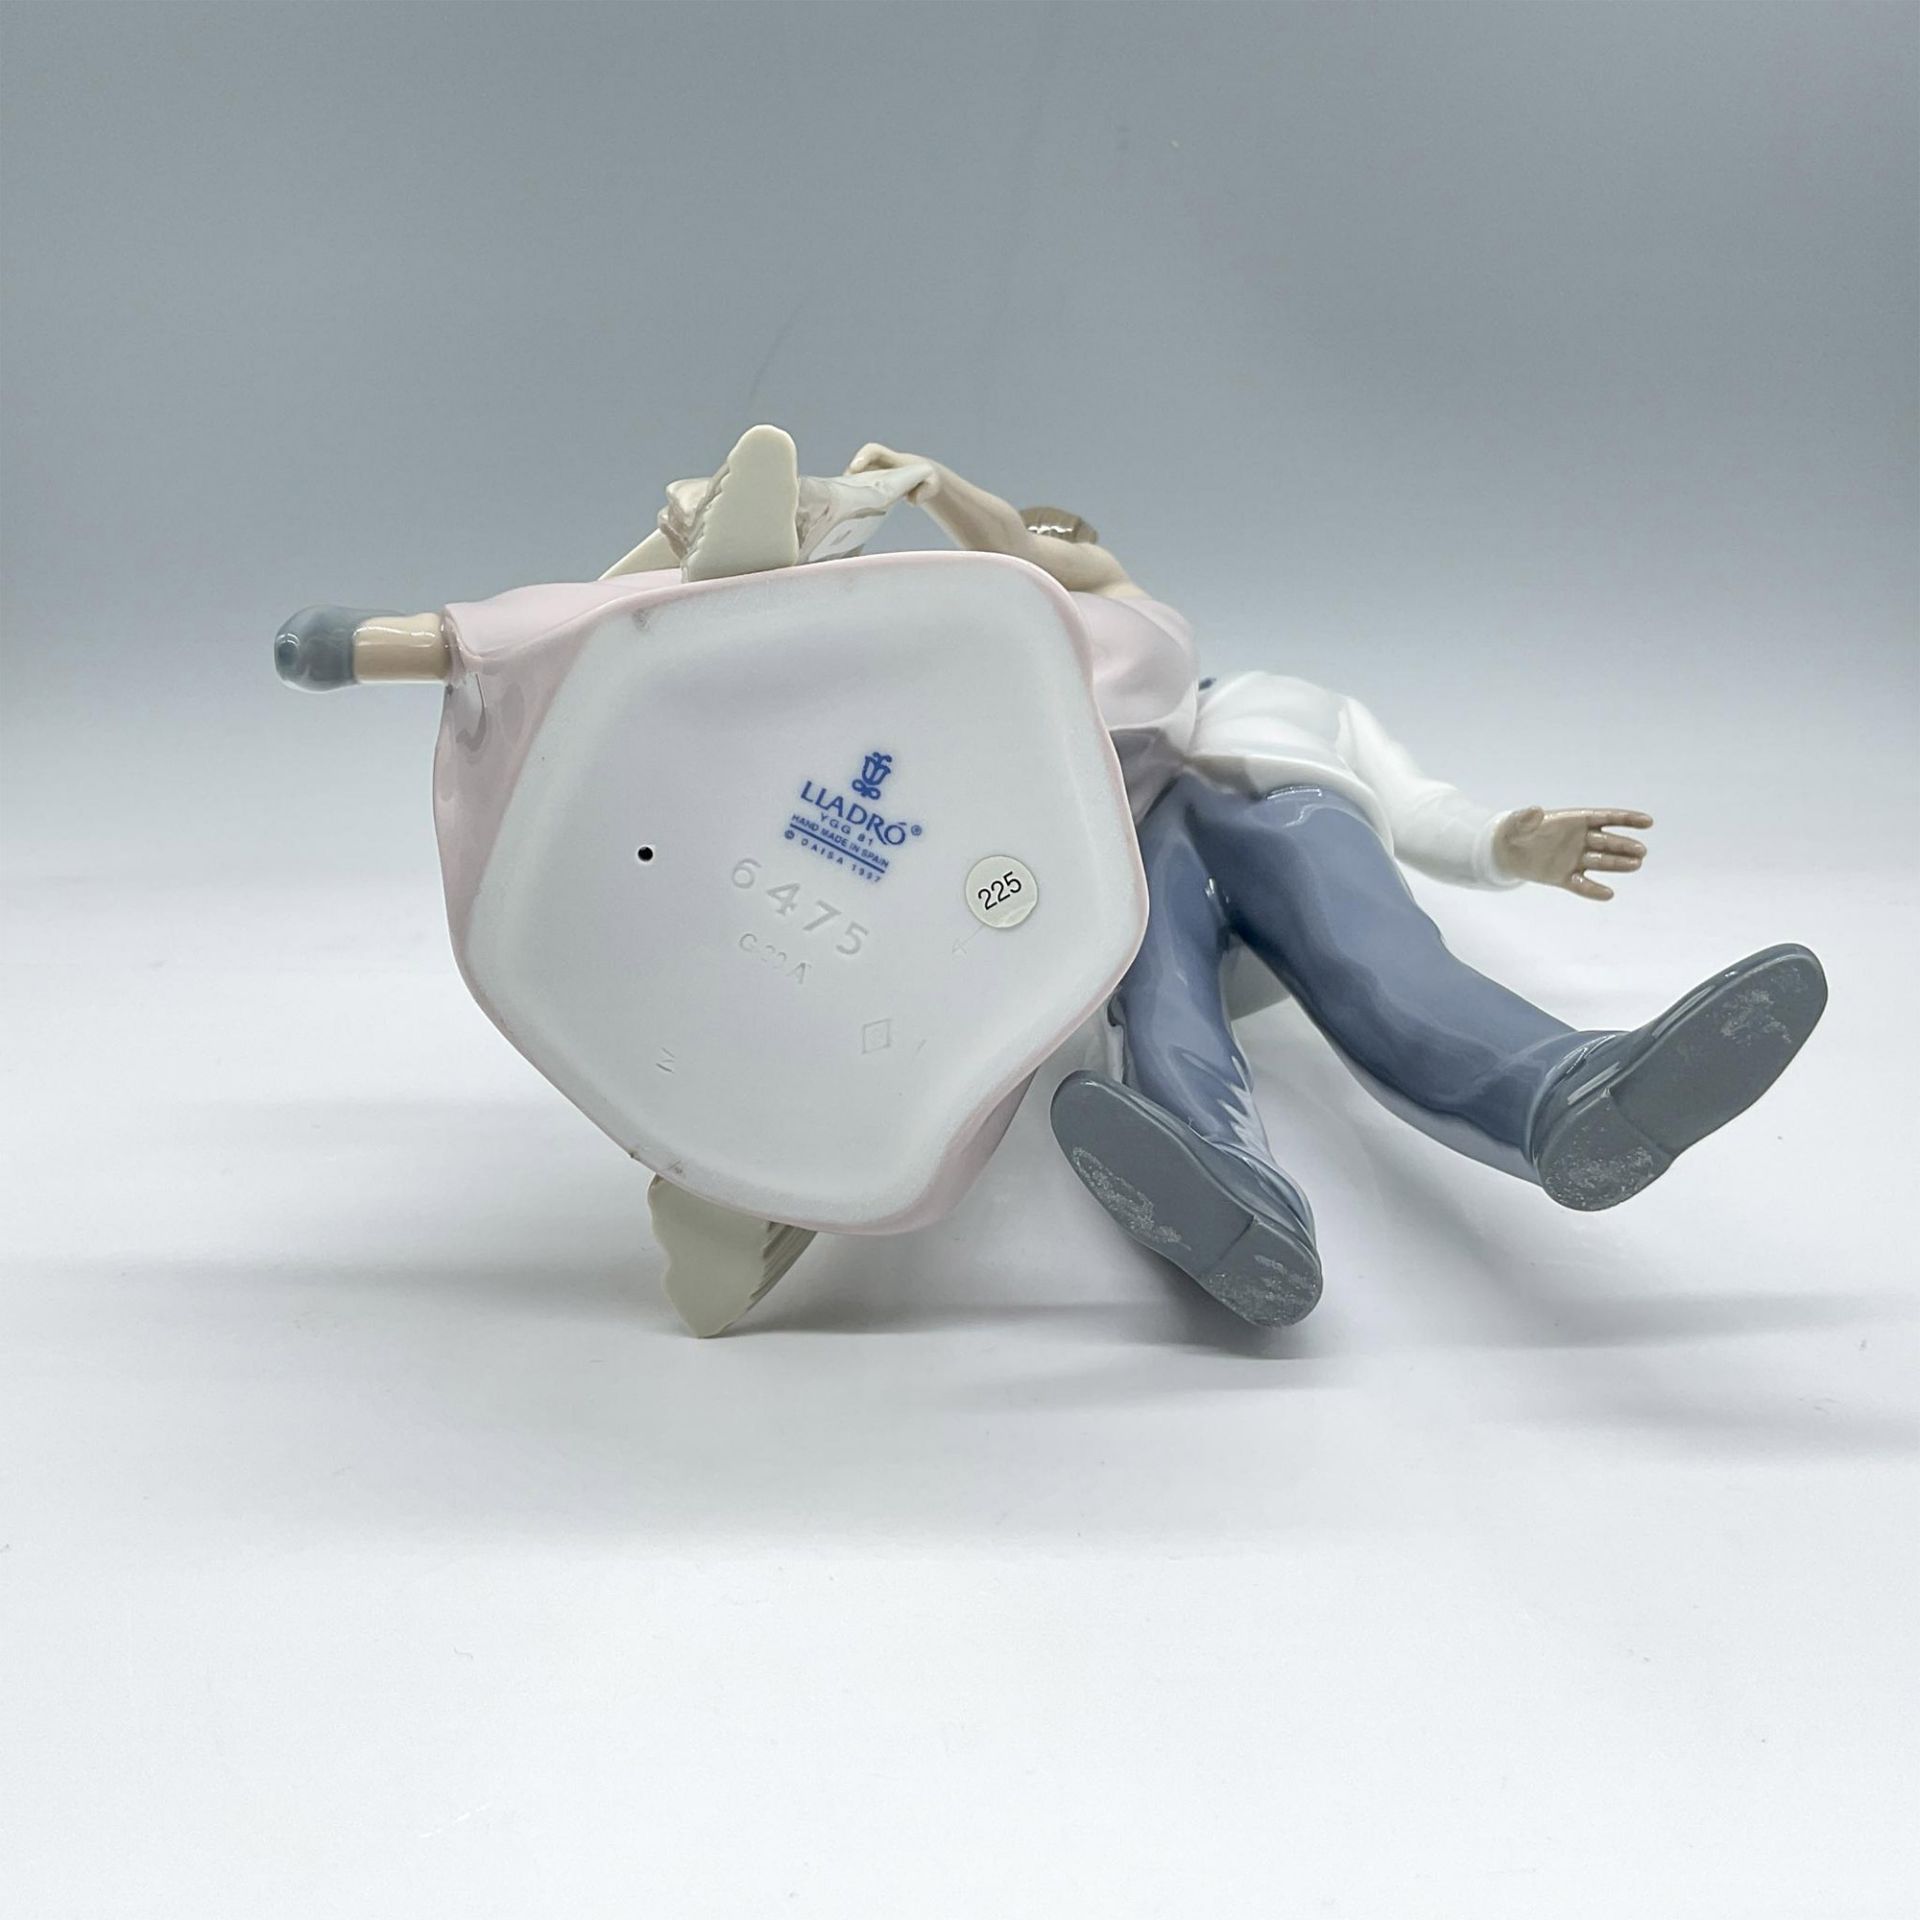 Happy Anniversary 1006475 - Lladro Porcelain Figurine - Image 3 of 3